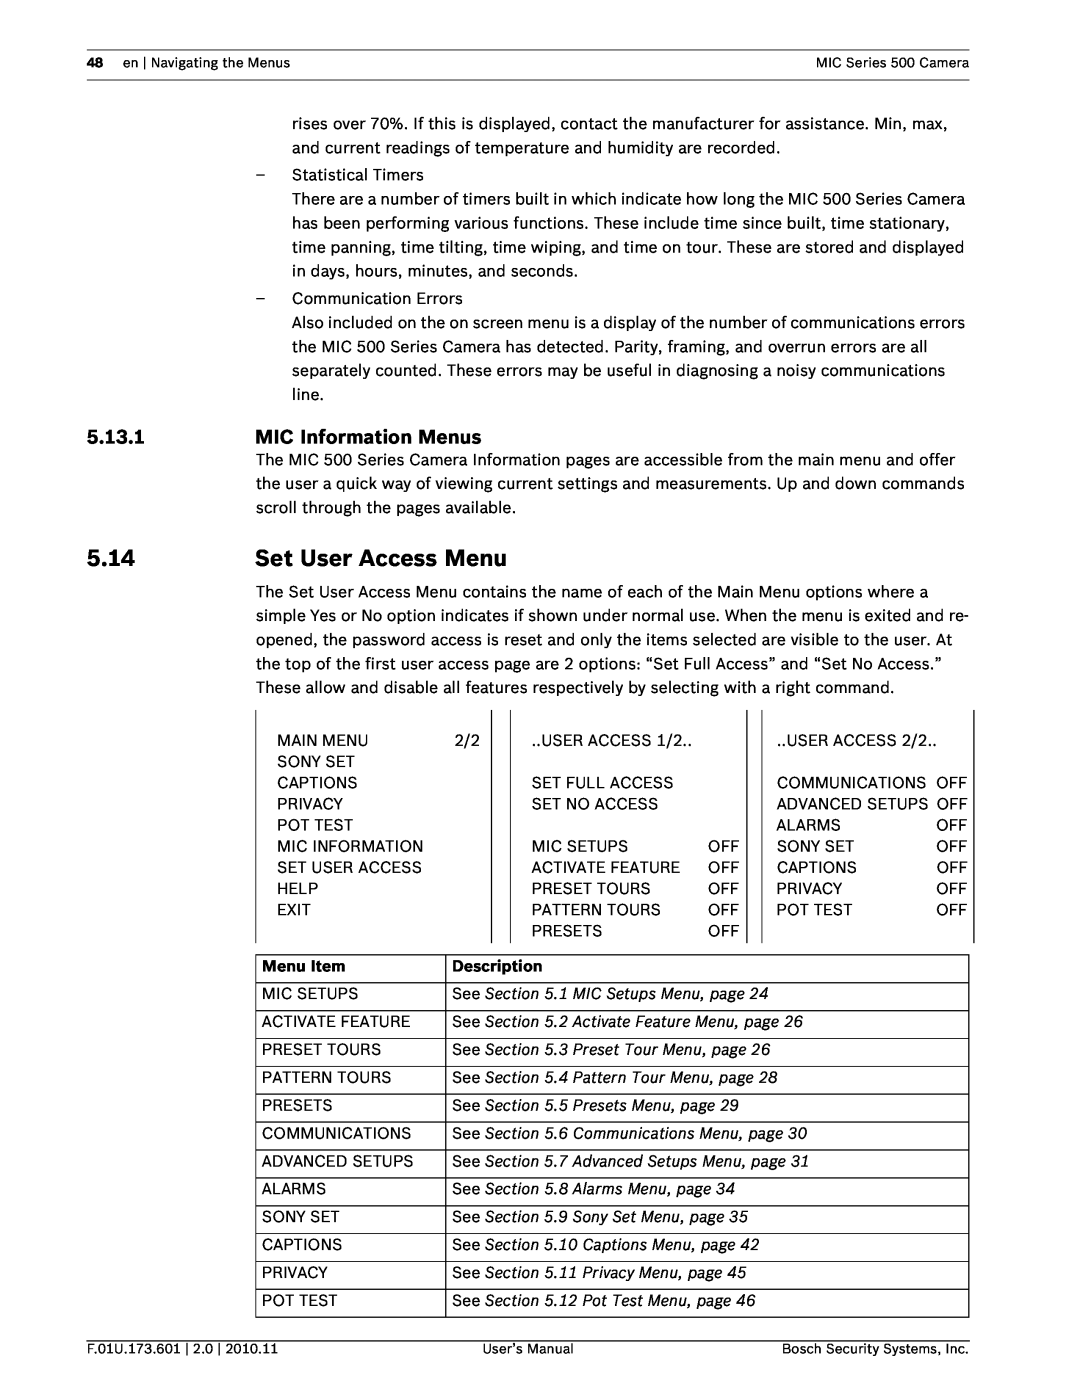 Bosch Appliances 500 user manual 5.14Set User Access Menu, 5.13.1, MIC Information Menus, Menu Item, Description 